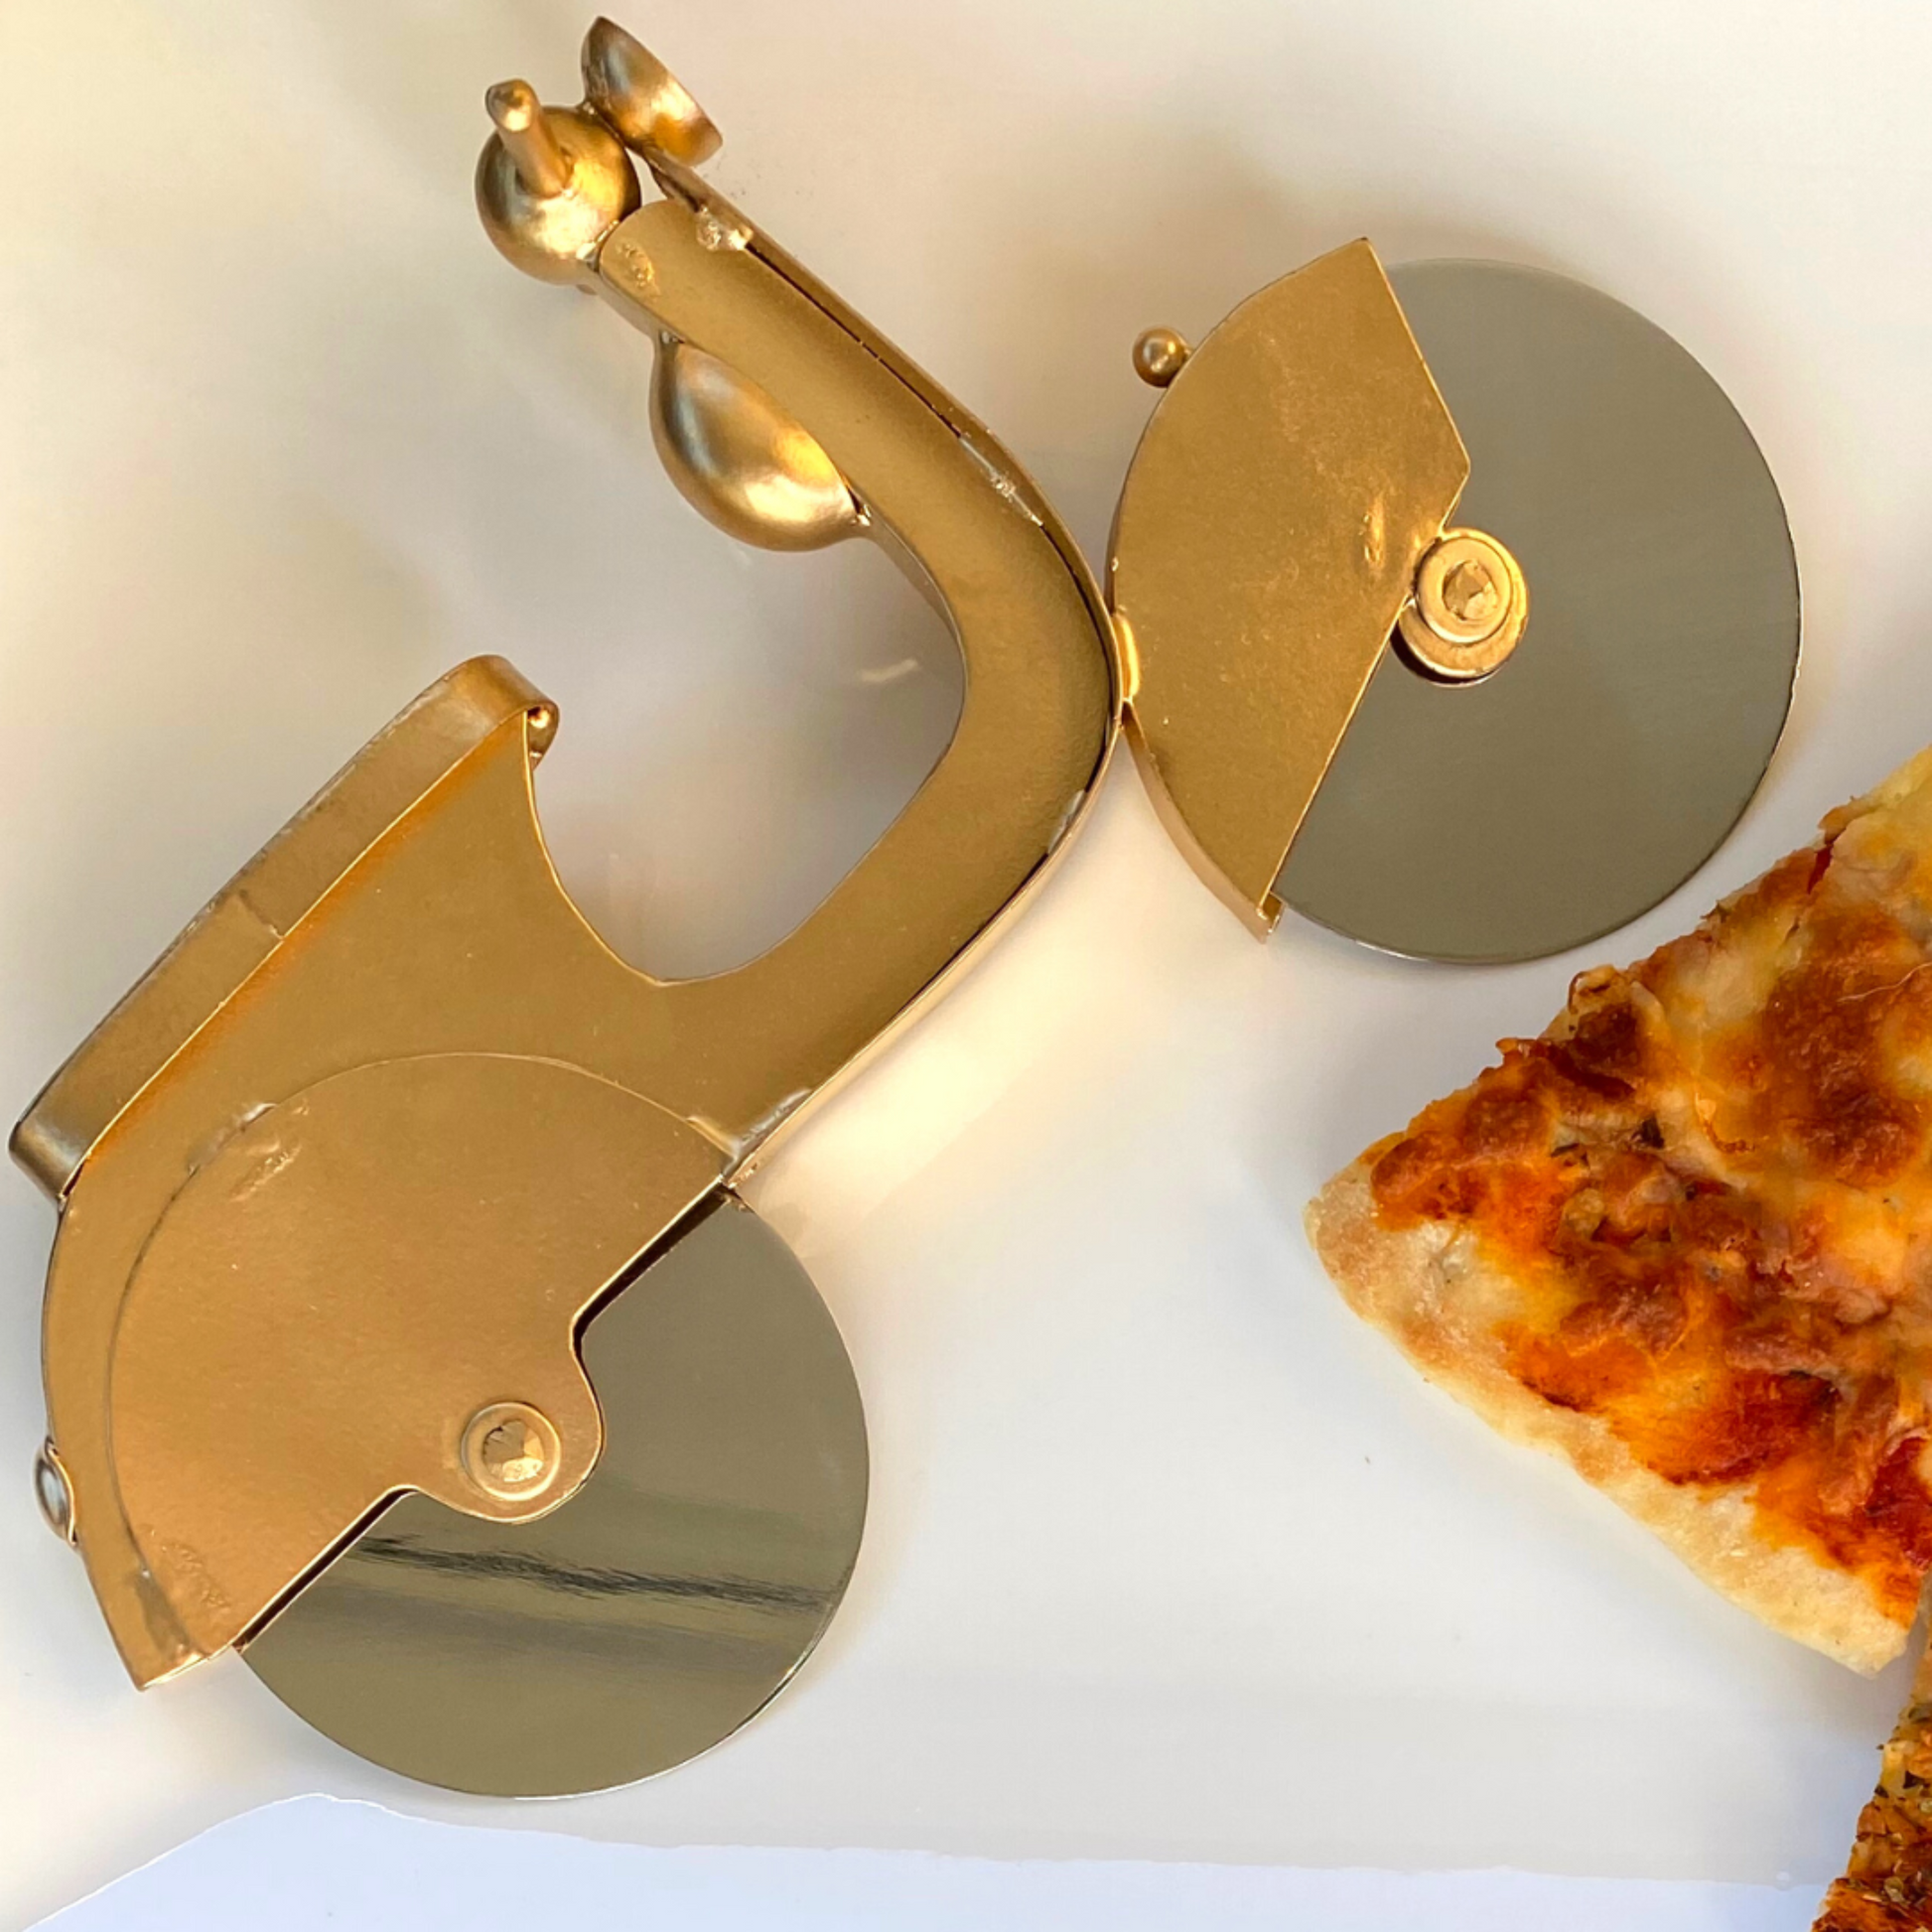 Scooter Pizza Cutter - Stainless Steel, Gold, Handmade - Aksa